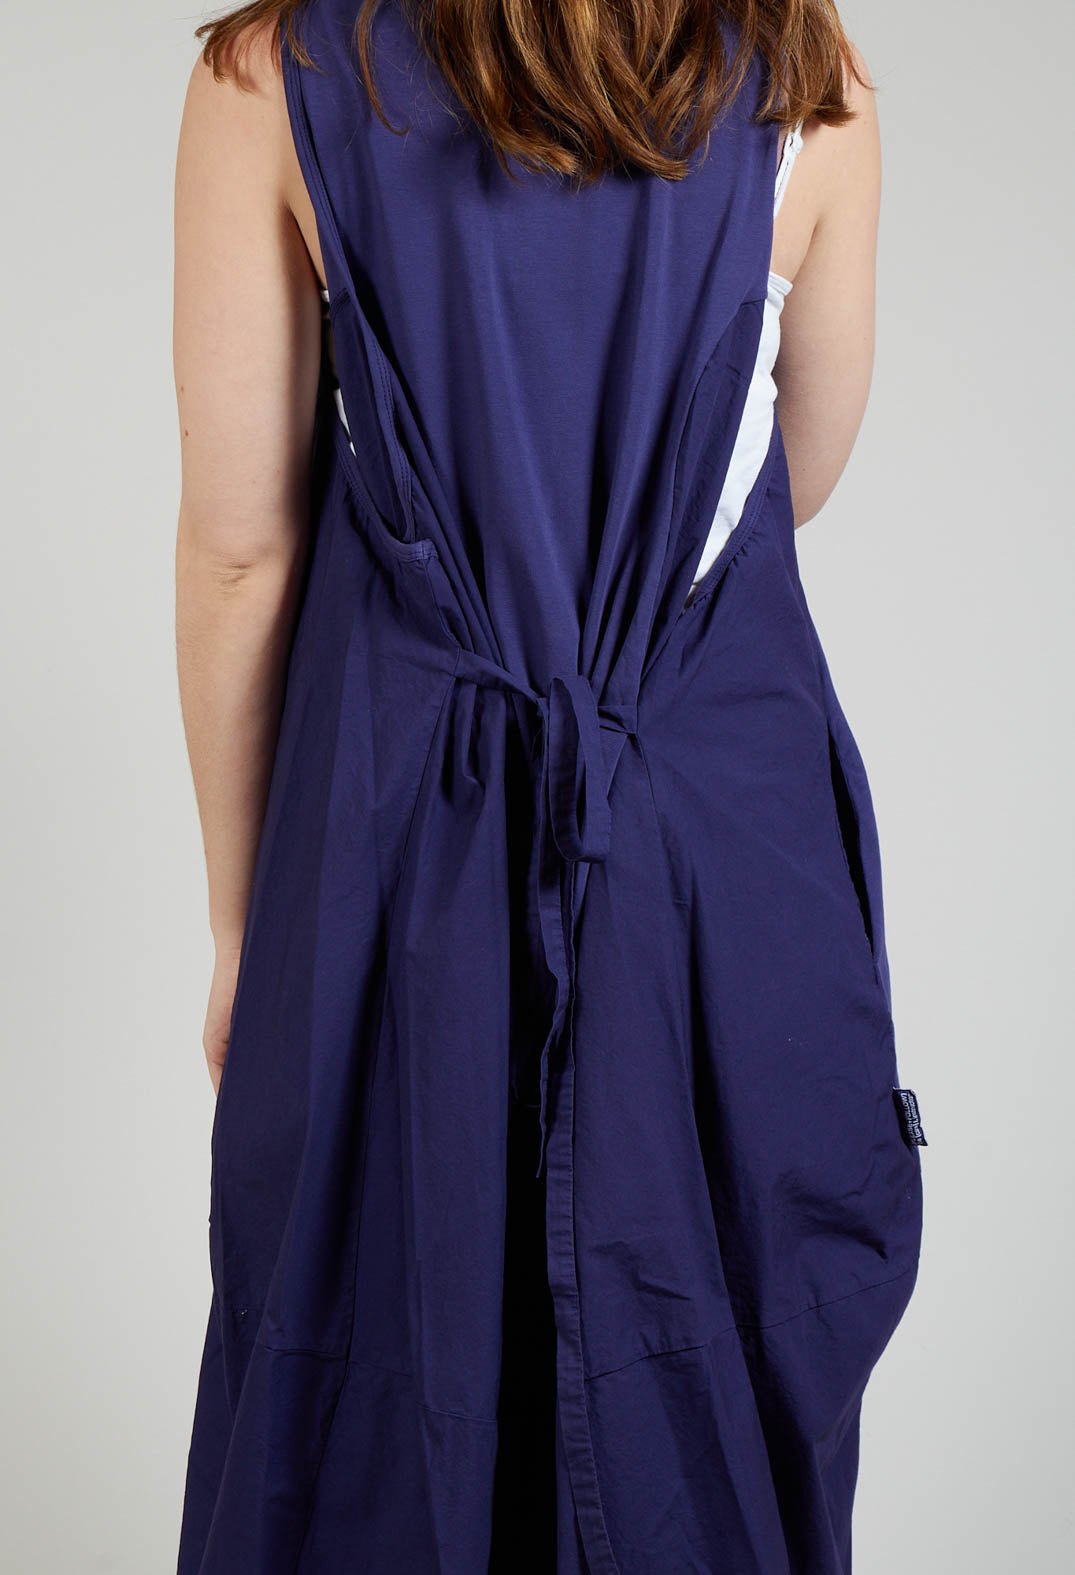 Dual Fabric Sleeveless Dress in Azur